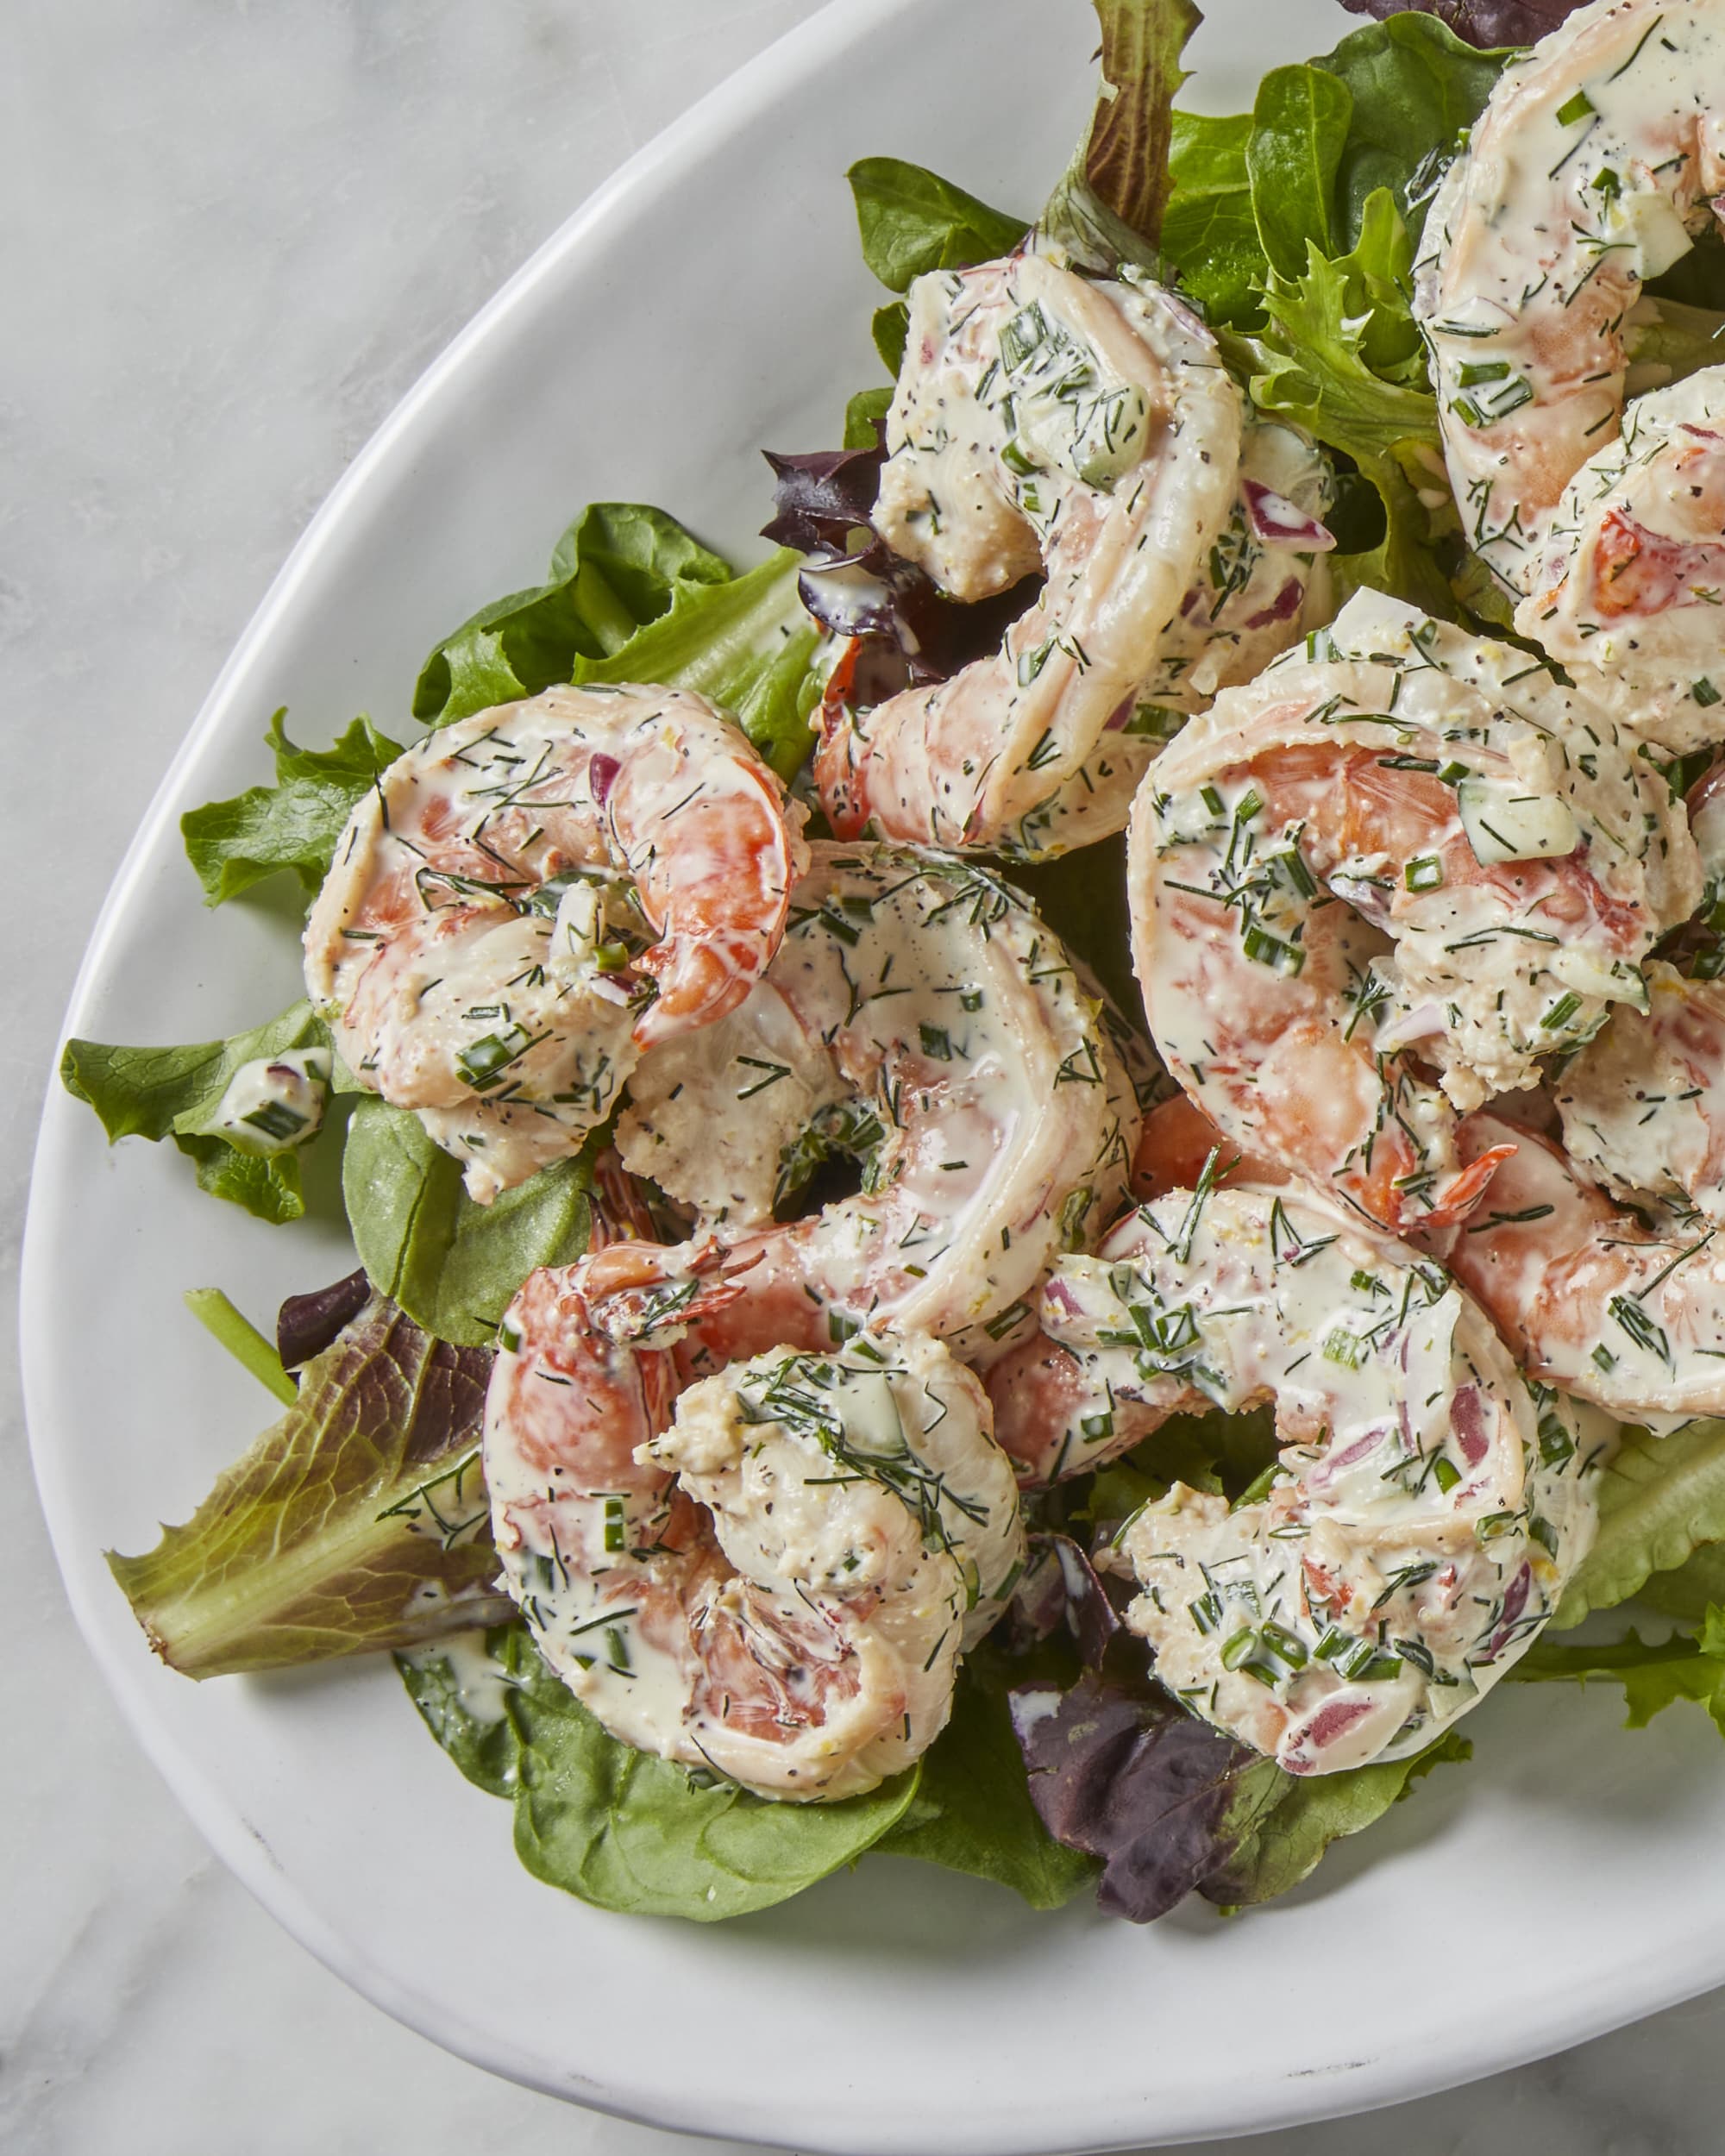 Best Shrimp Salad Recipe - How To Make Shrimp Salad